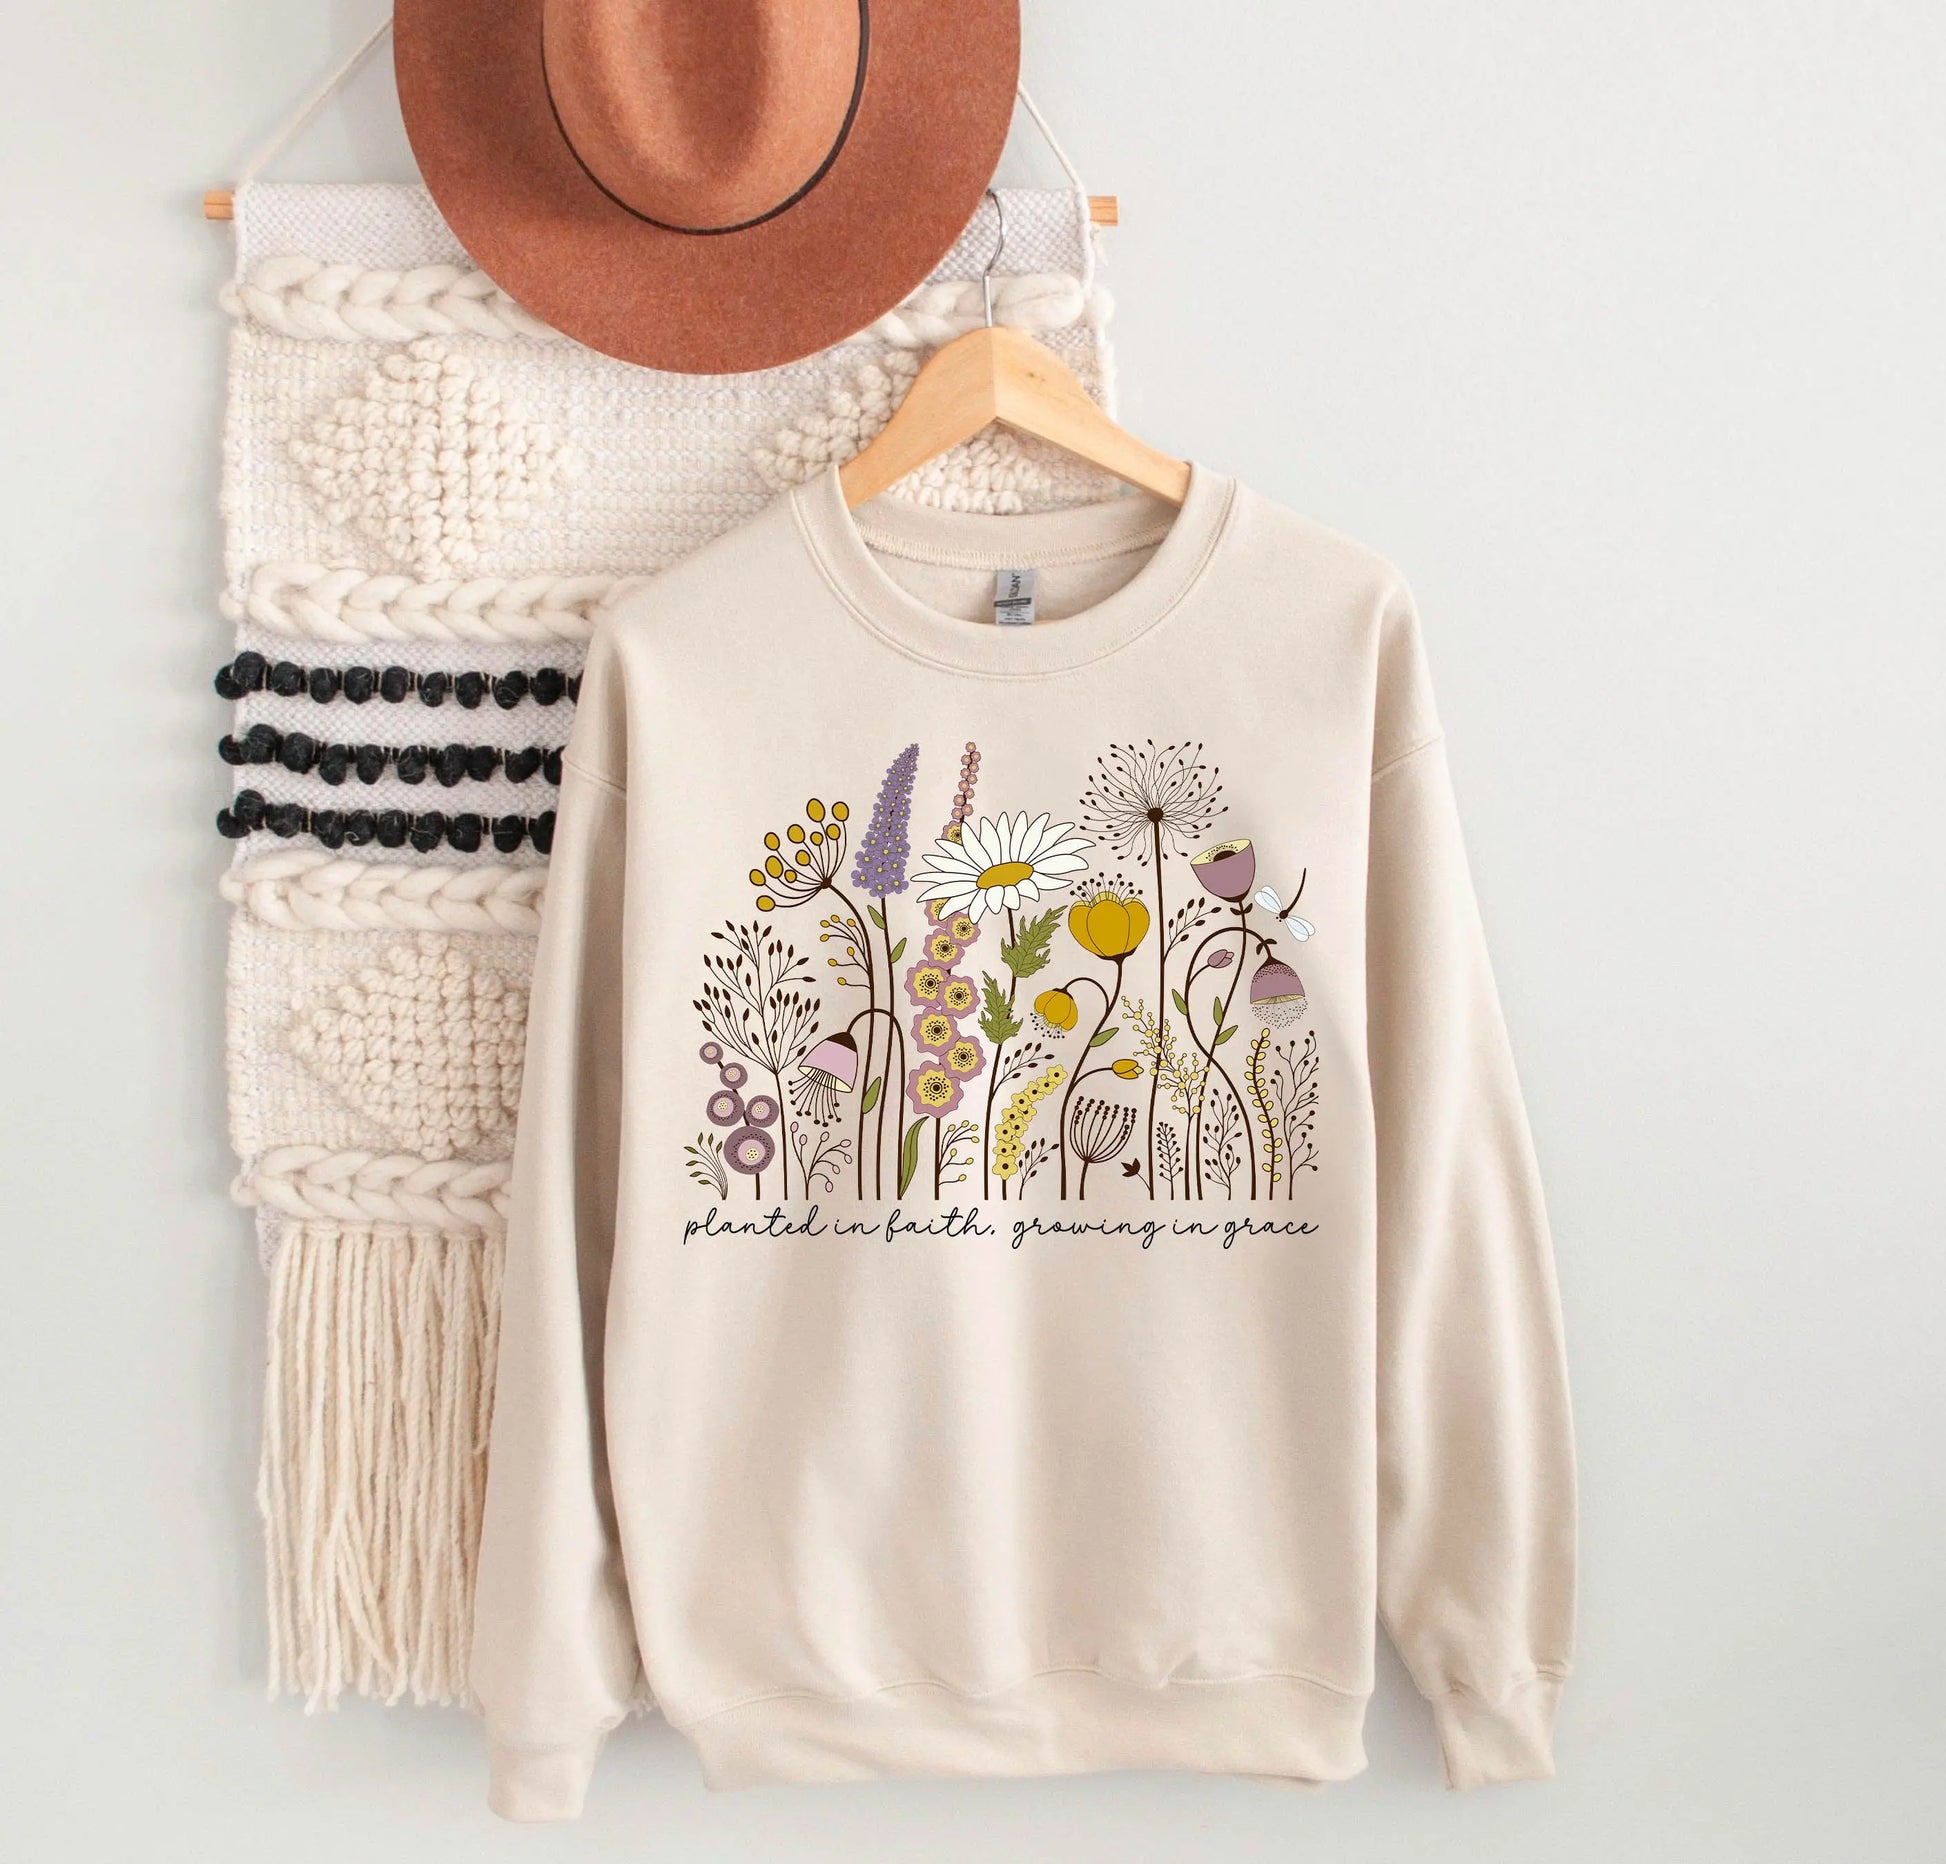 Wildflower Sweatshirt | Planted in Faith, Growing in Grace teelaunch